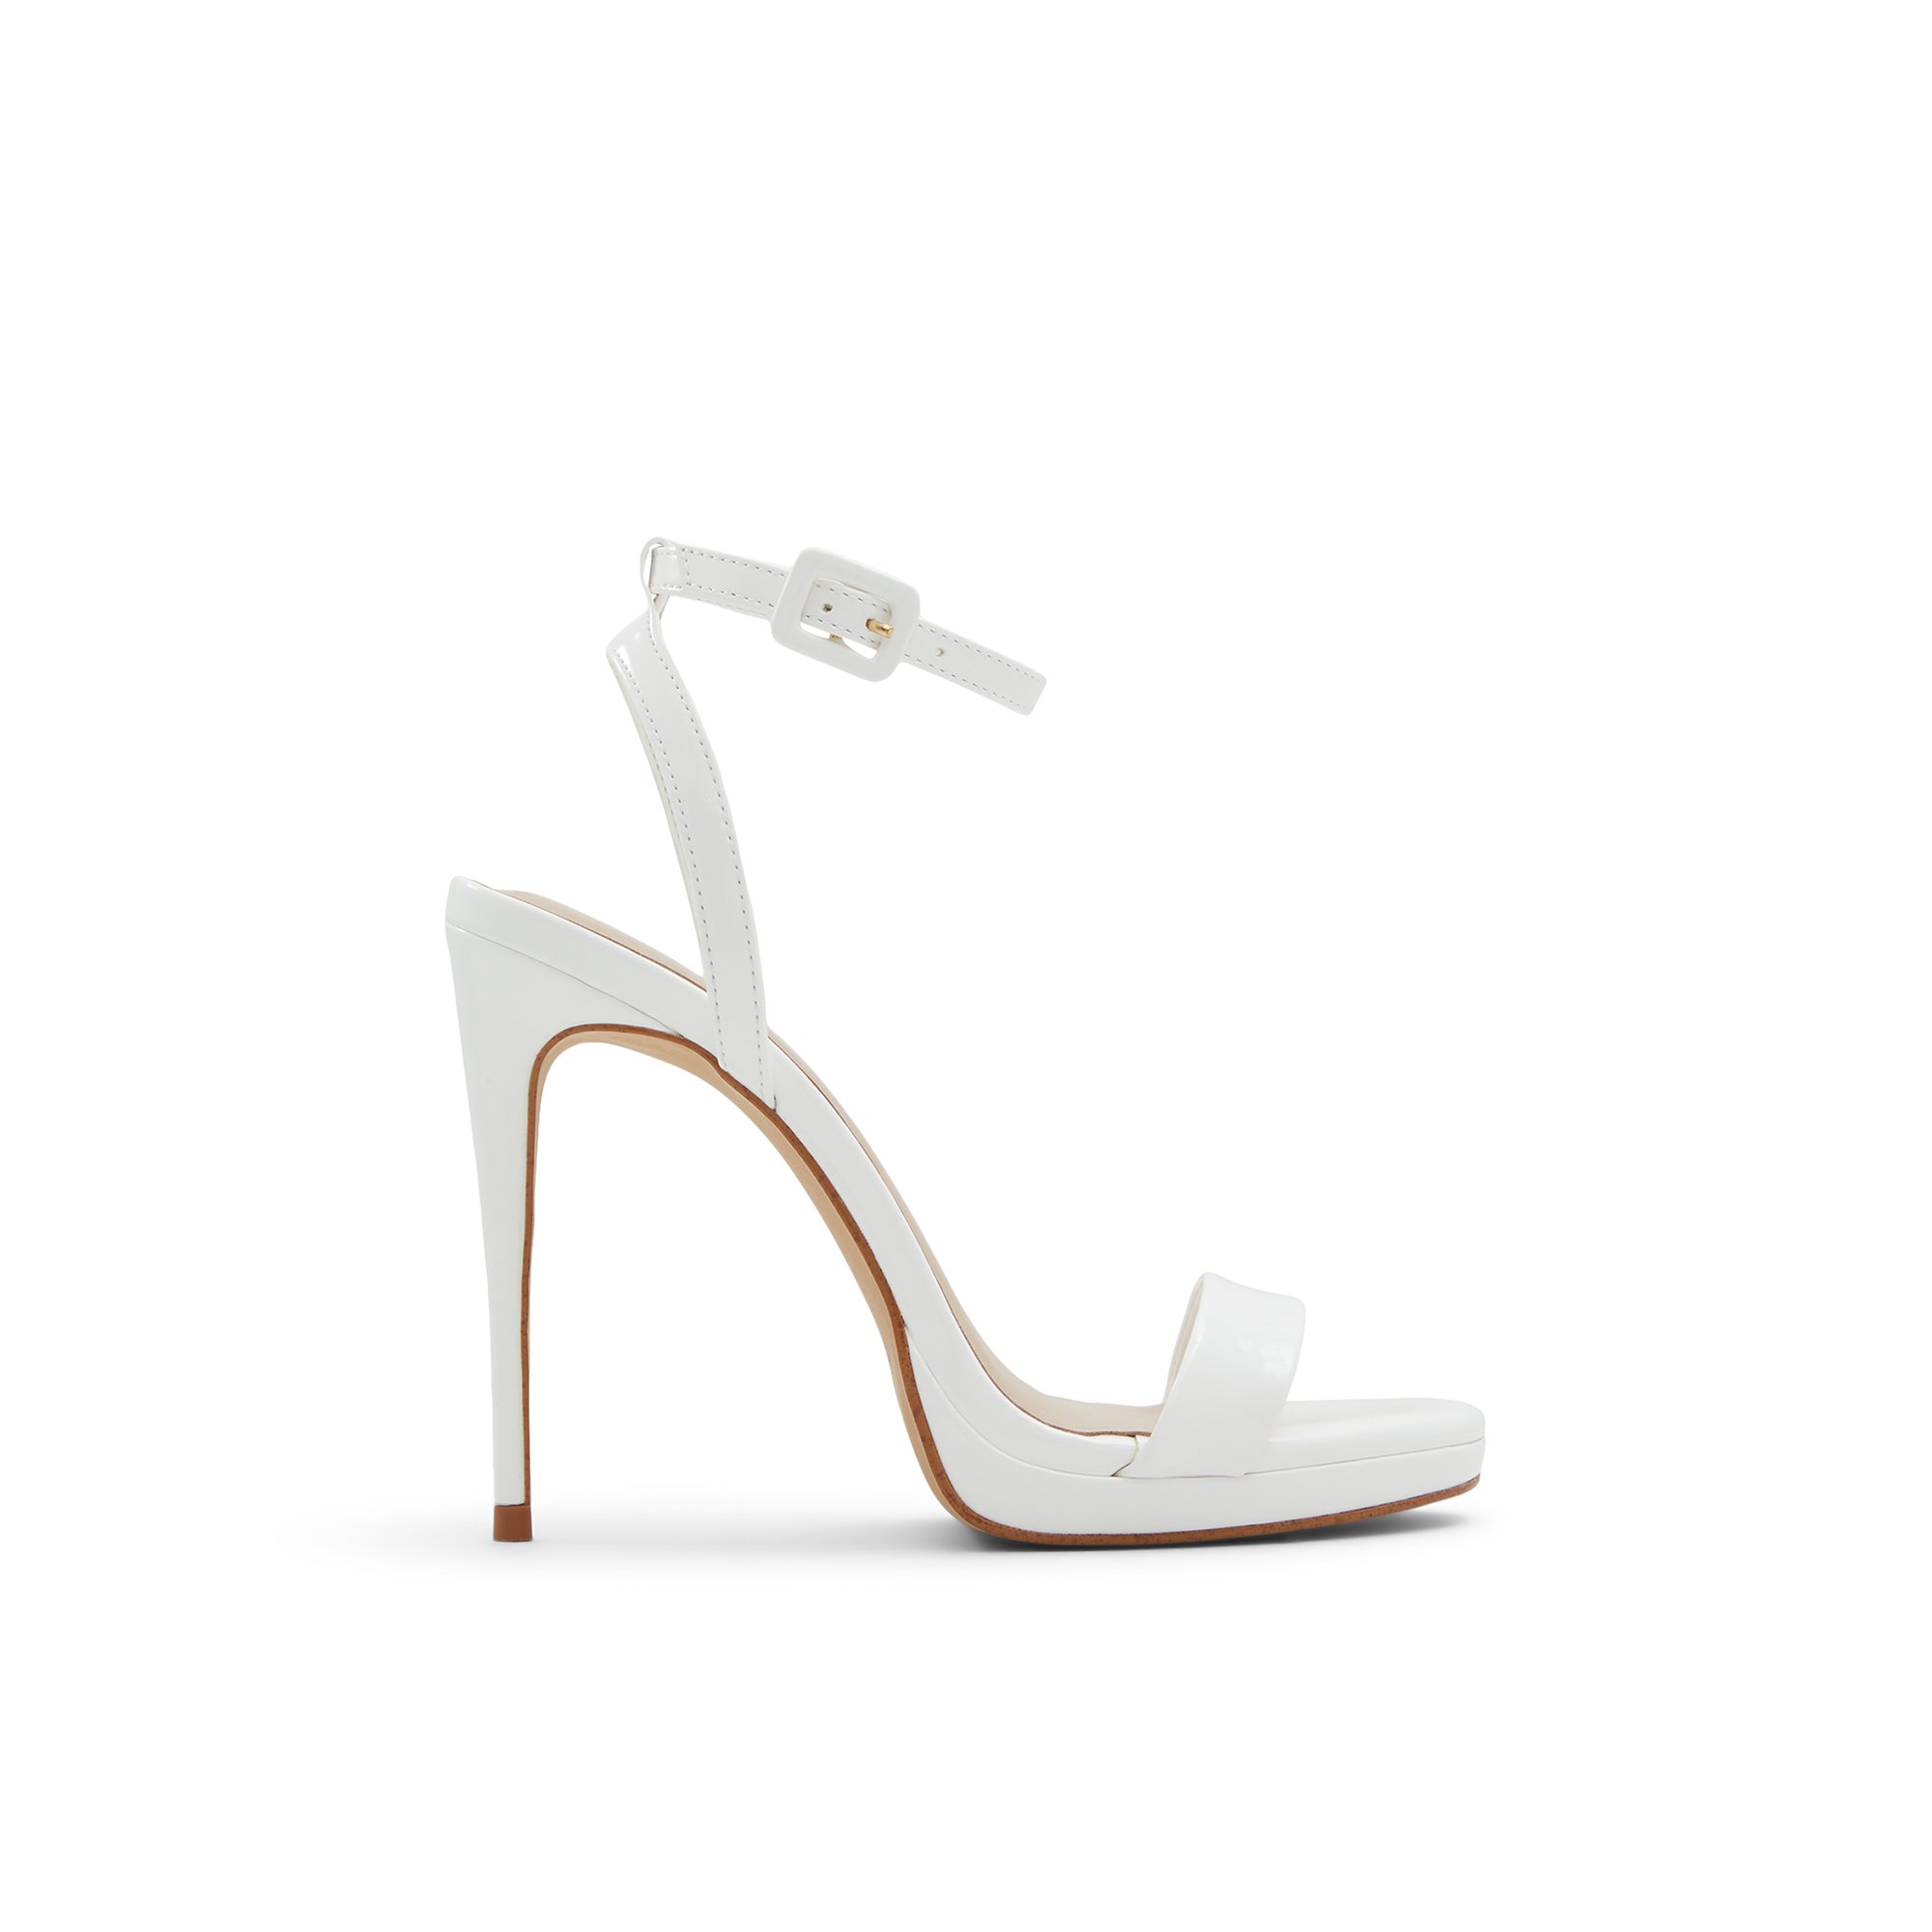 ALDO Kat - Women's Strappy Sandal Sandals - White